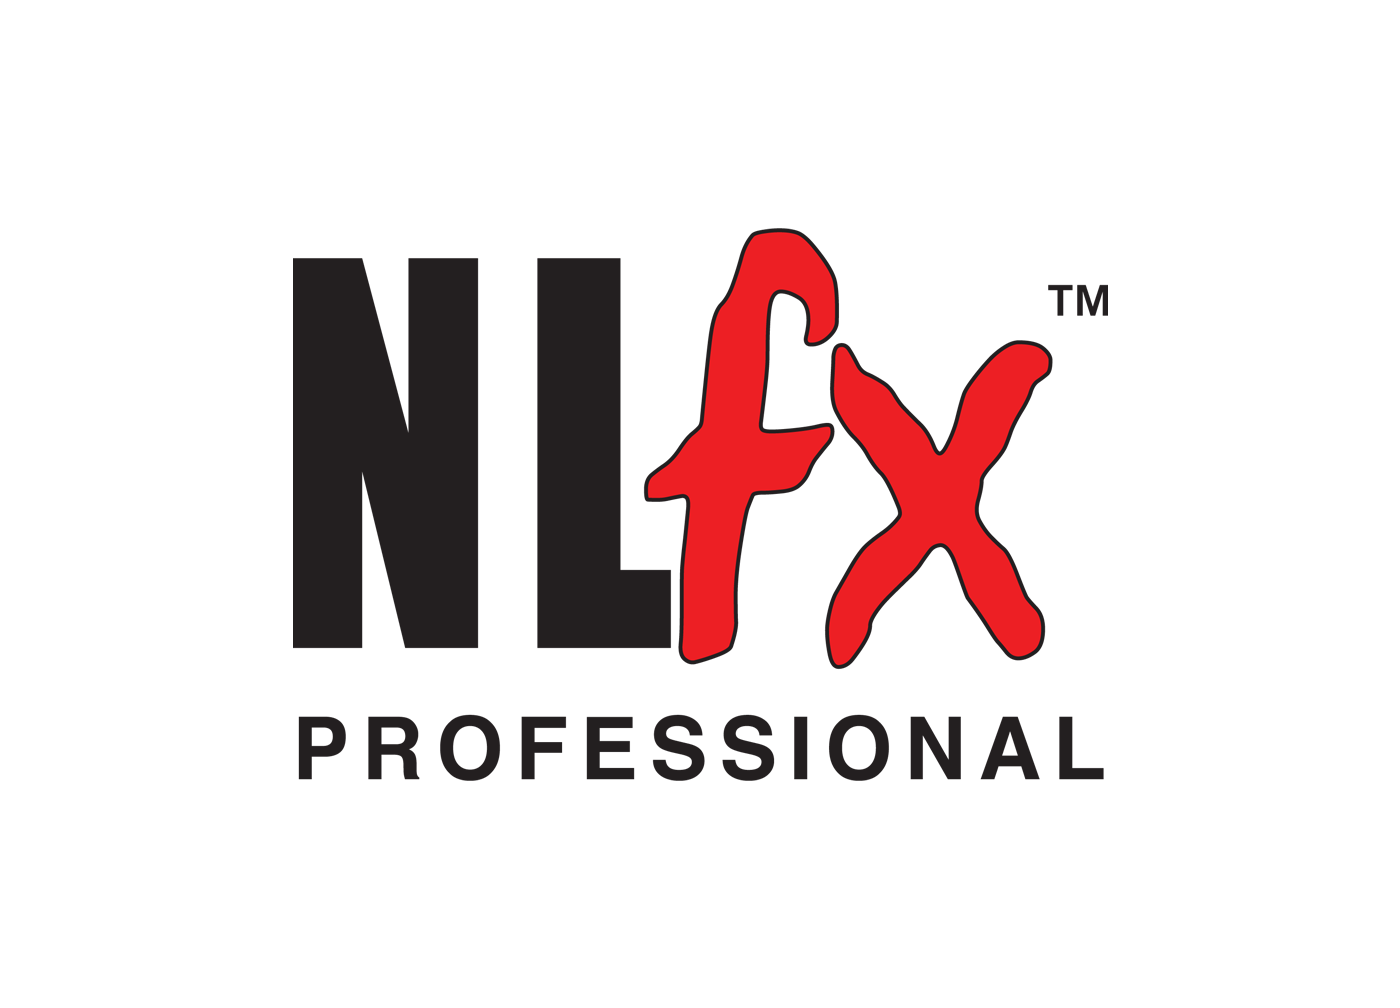 NLFX Professional logo.